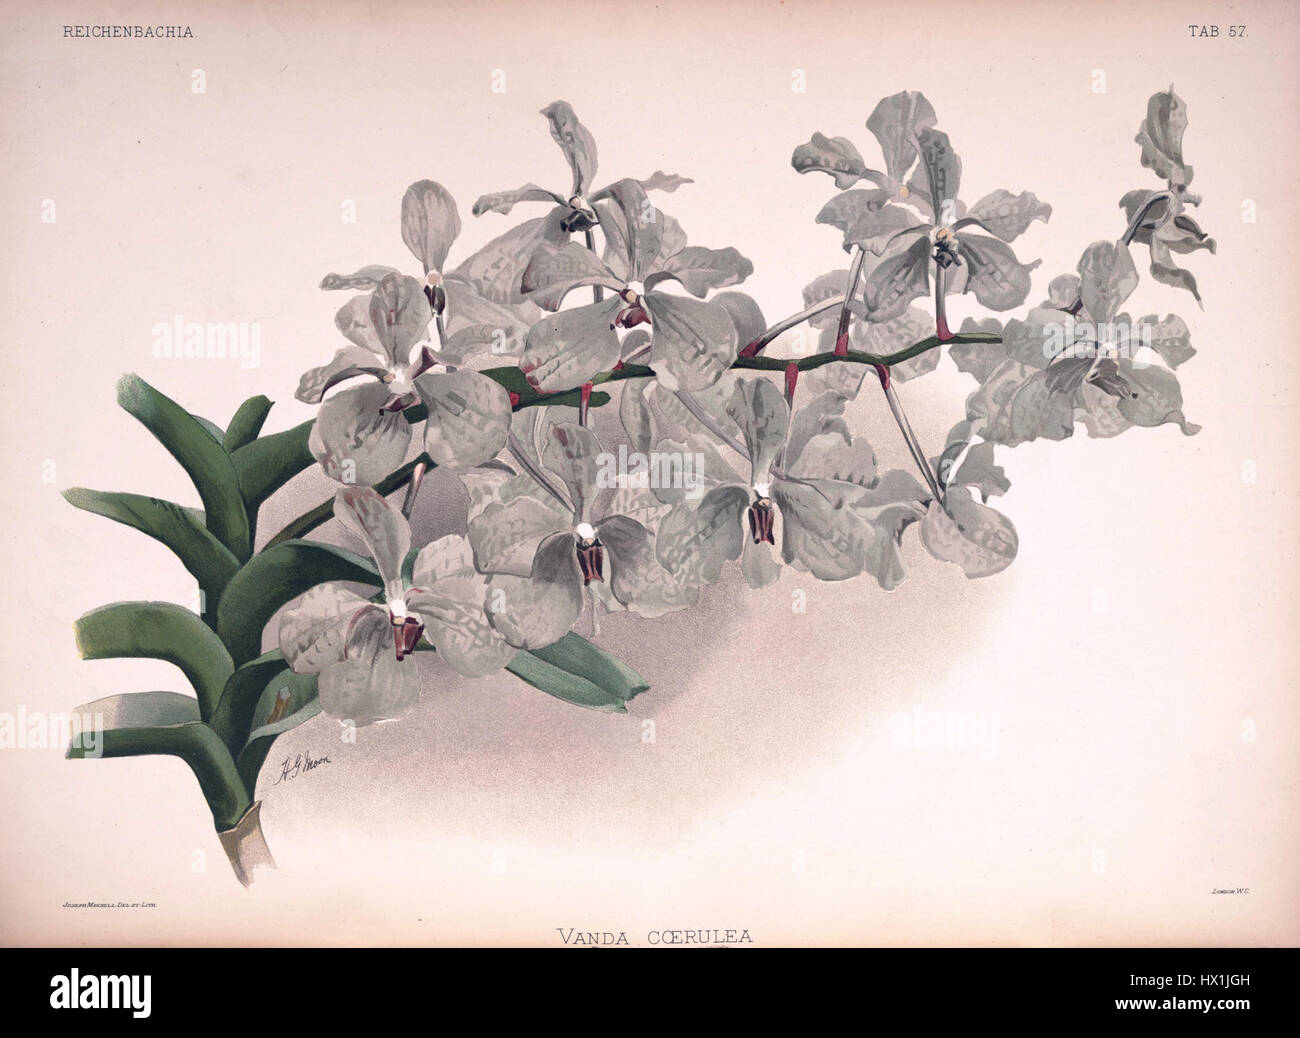 Frederick Sander   Reichenbachia II plate 57 (1890)   Vanda coerulea Stock Photo